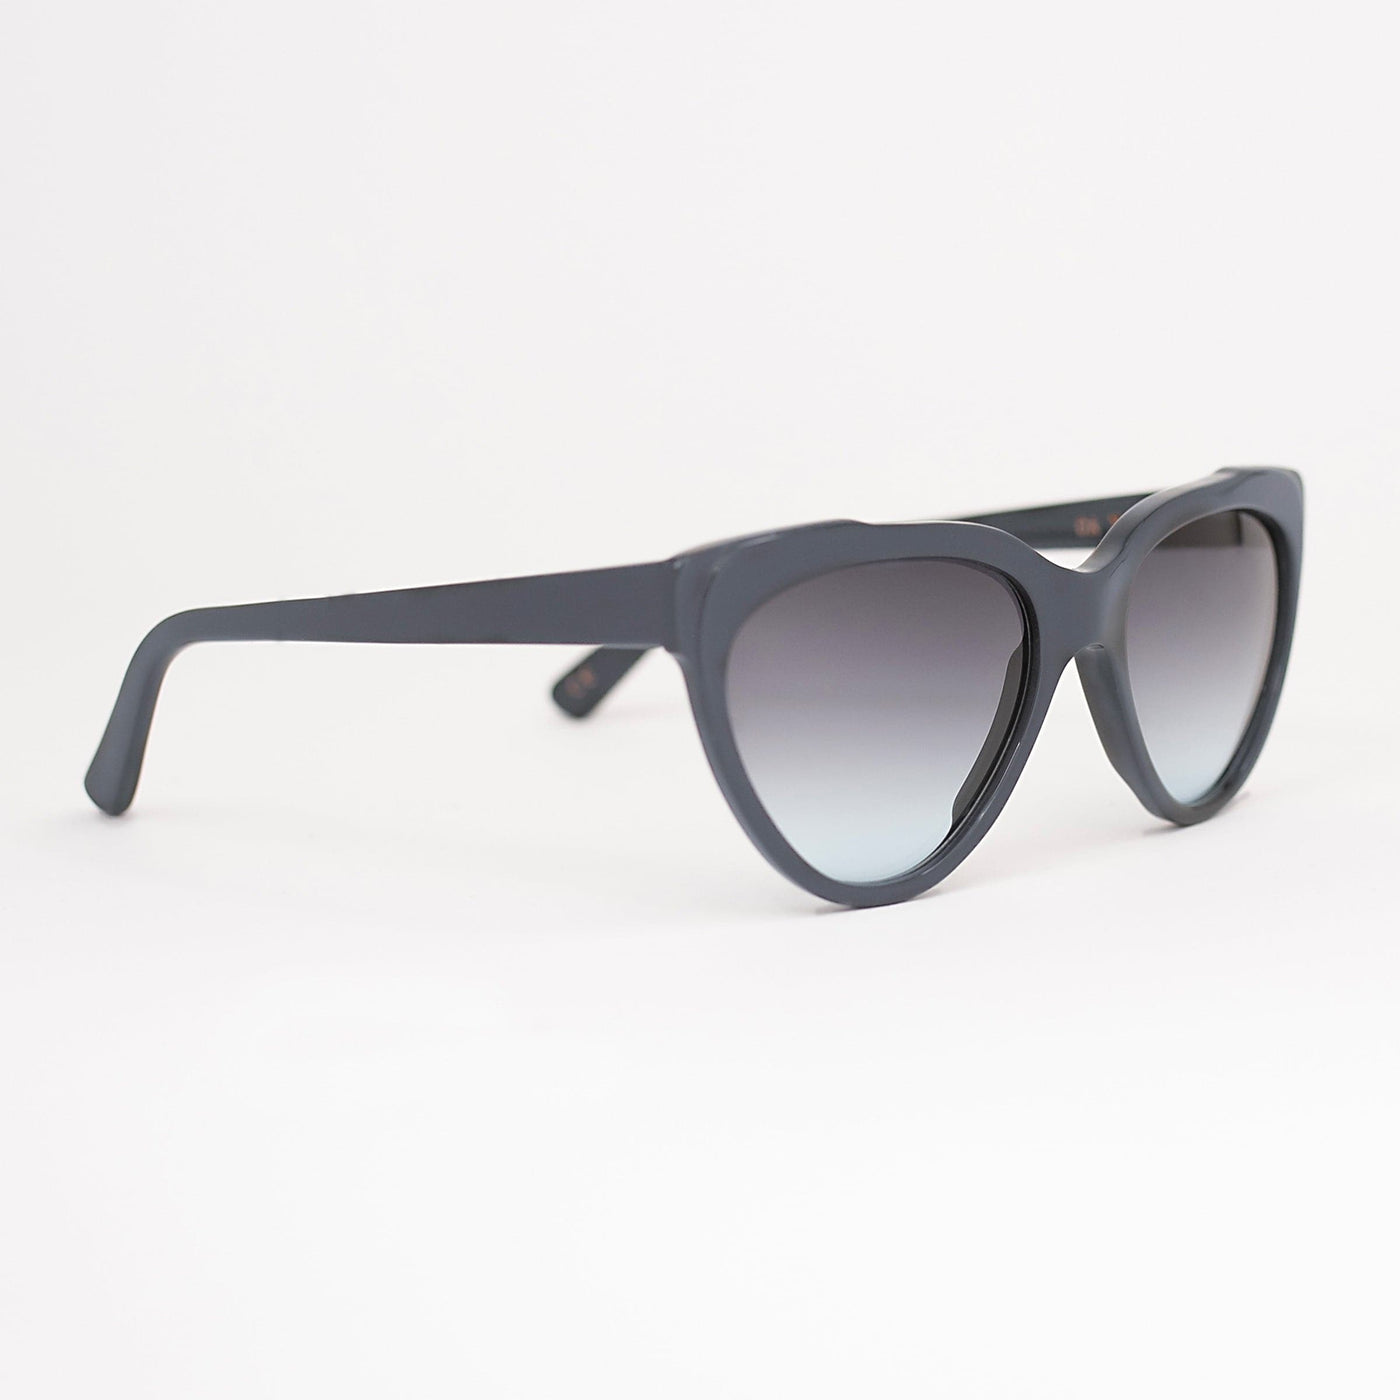 Sunglasses OA X 06